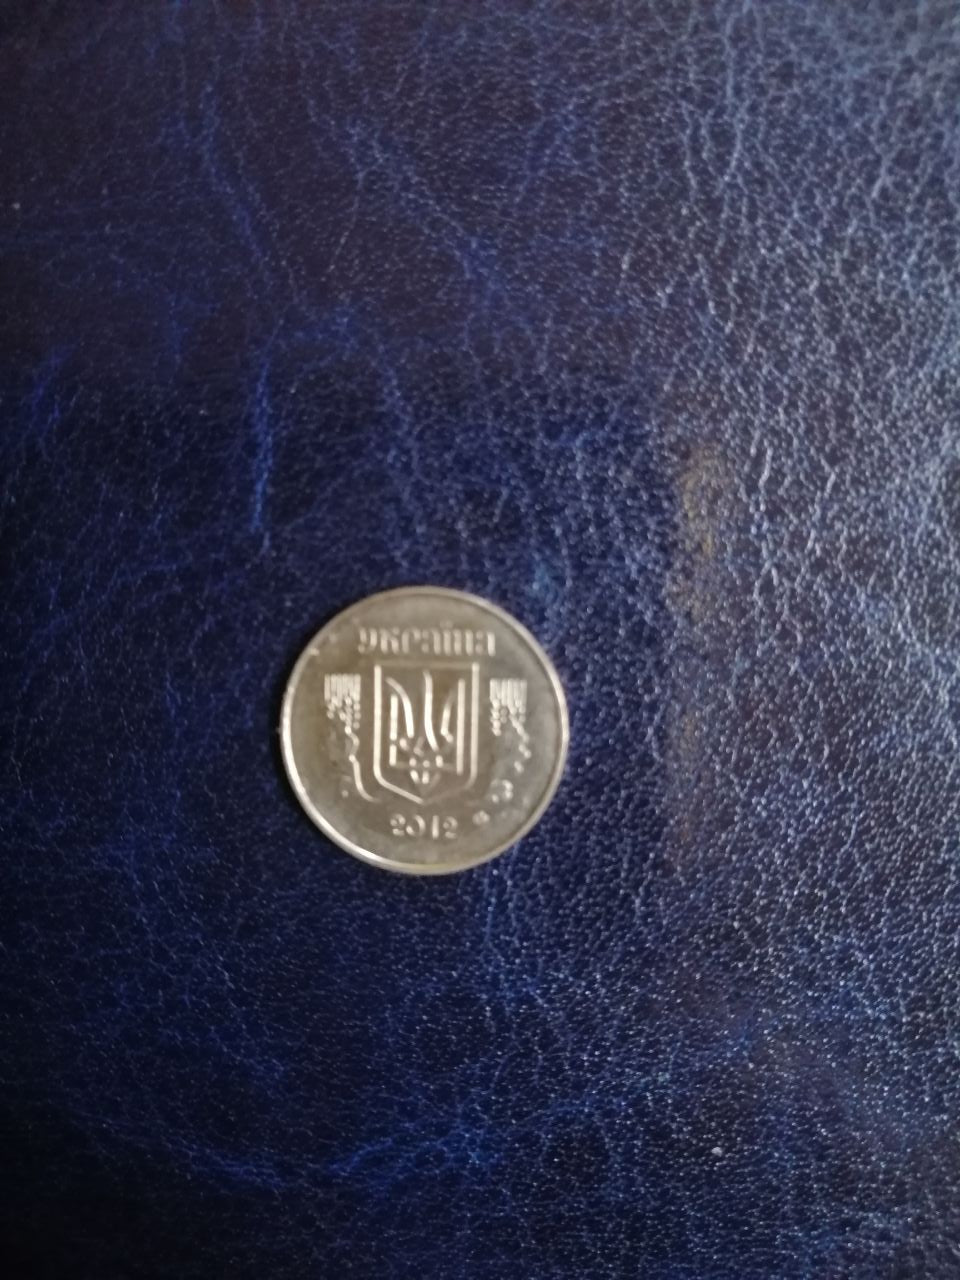 Support a Ukrainian Family: Buy Collectible Ukrainian Coin Magnet